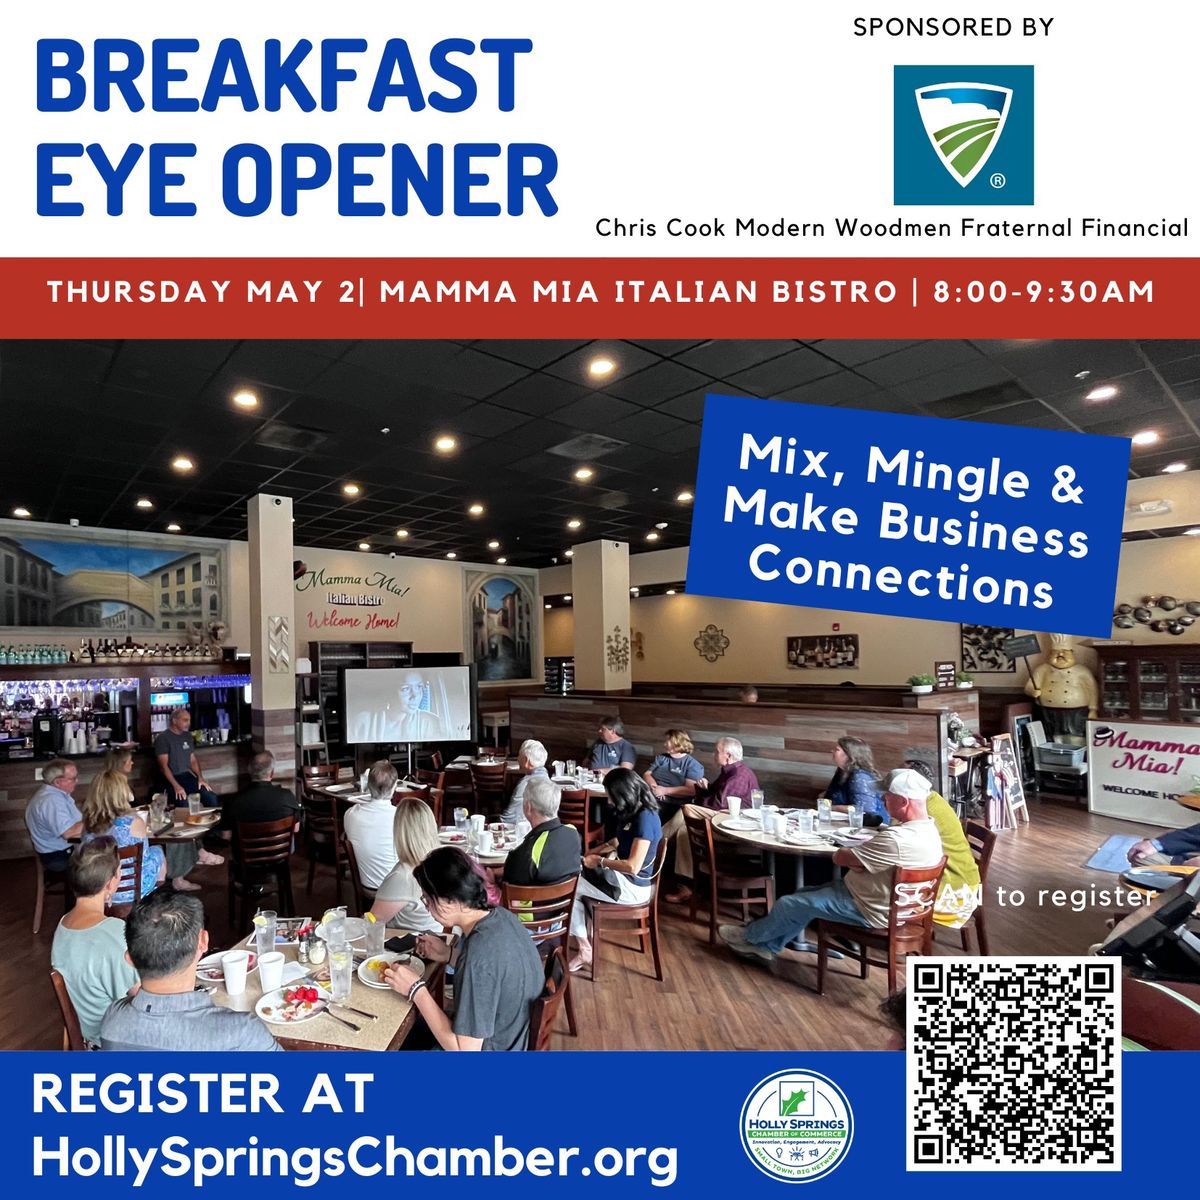 Breakfast Eye Opener Sponsored by Chris Cook, Modern Woodmen of America